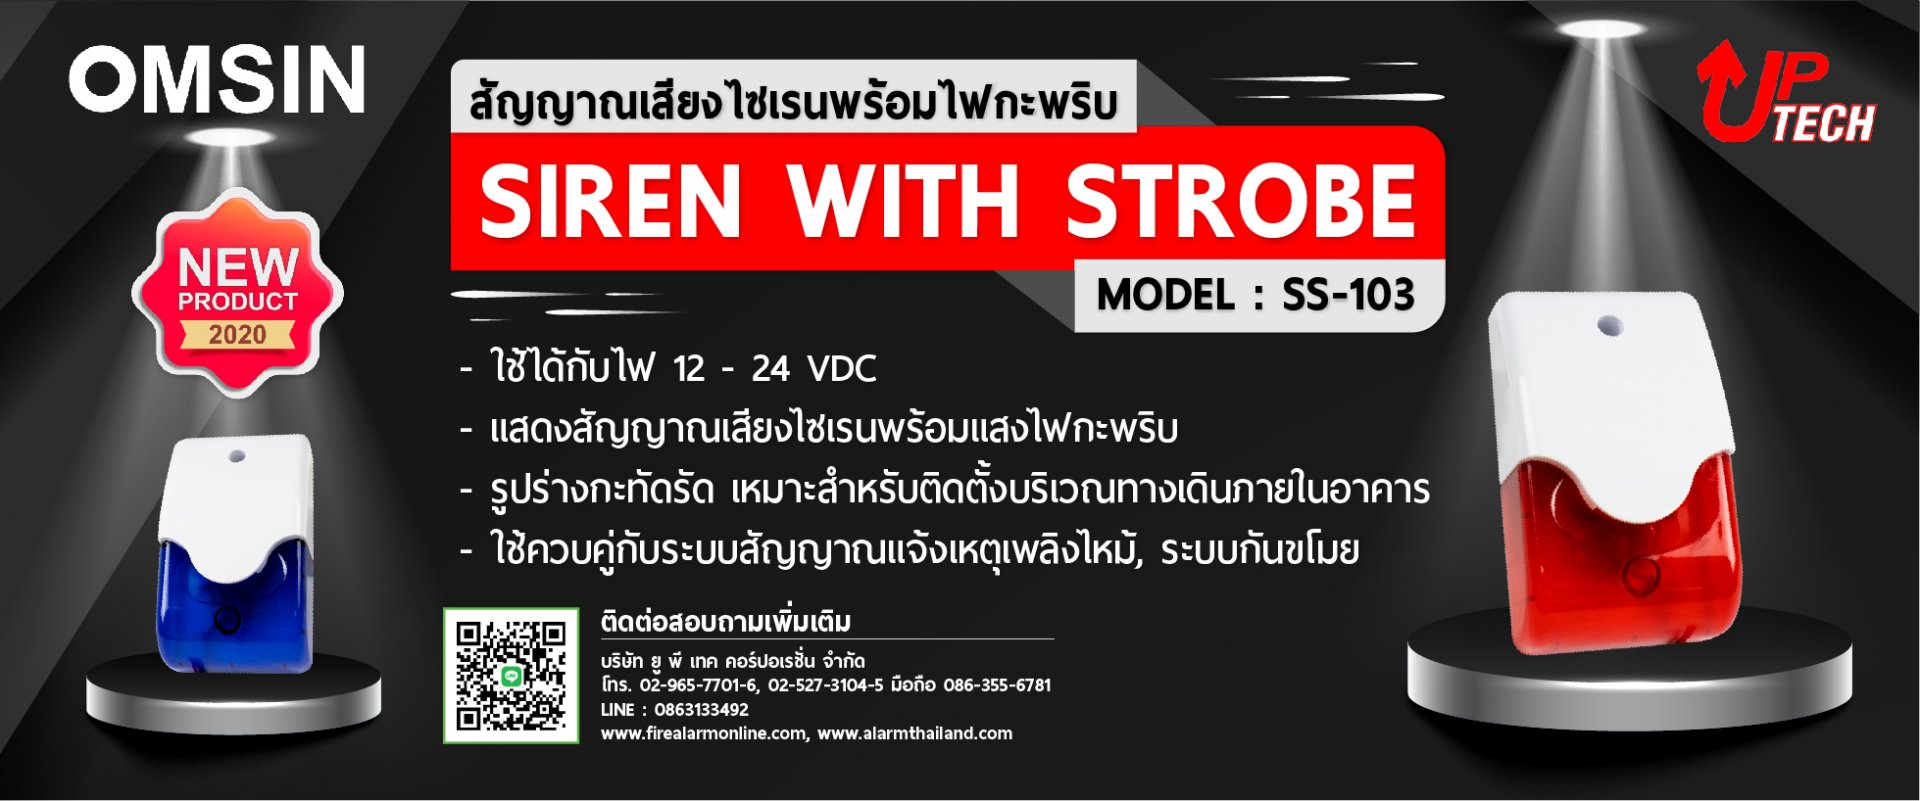 SS-103 Siren With Strobe (สัญญาณเสียงไซเรนพร้อมไฟกะพริบ) ยี่ห้อ OMSIN 